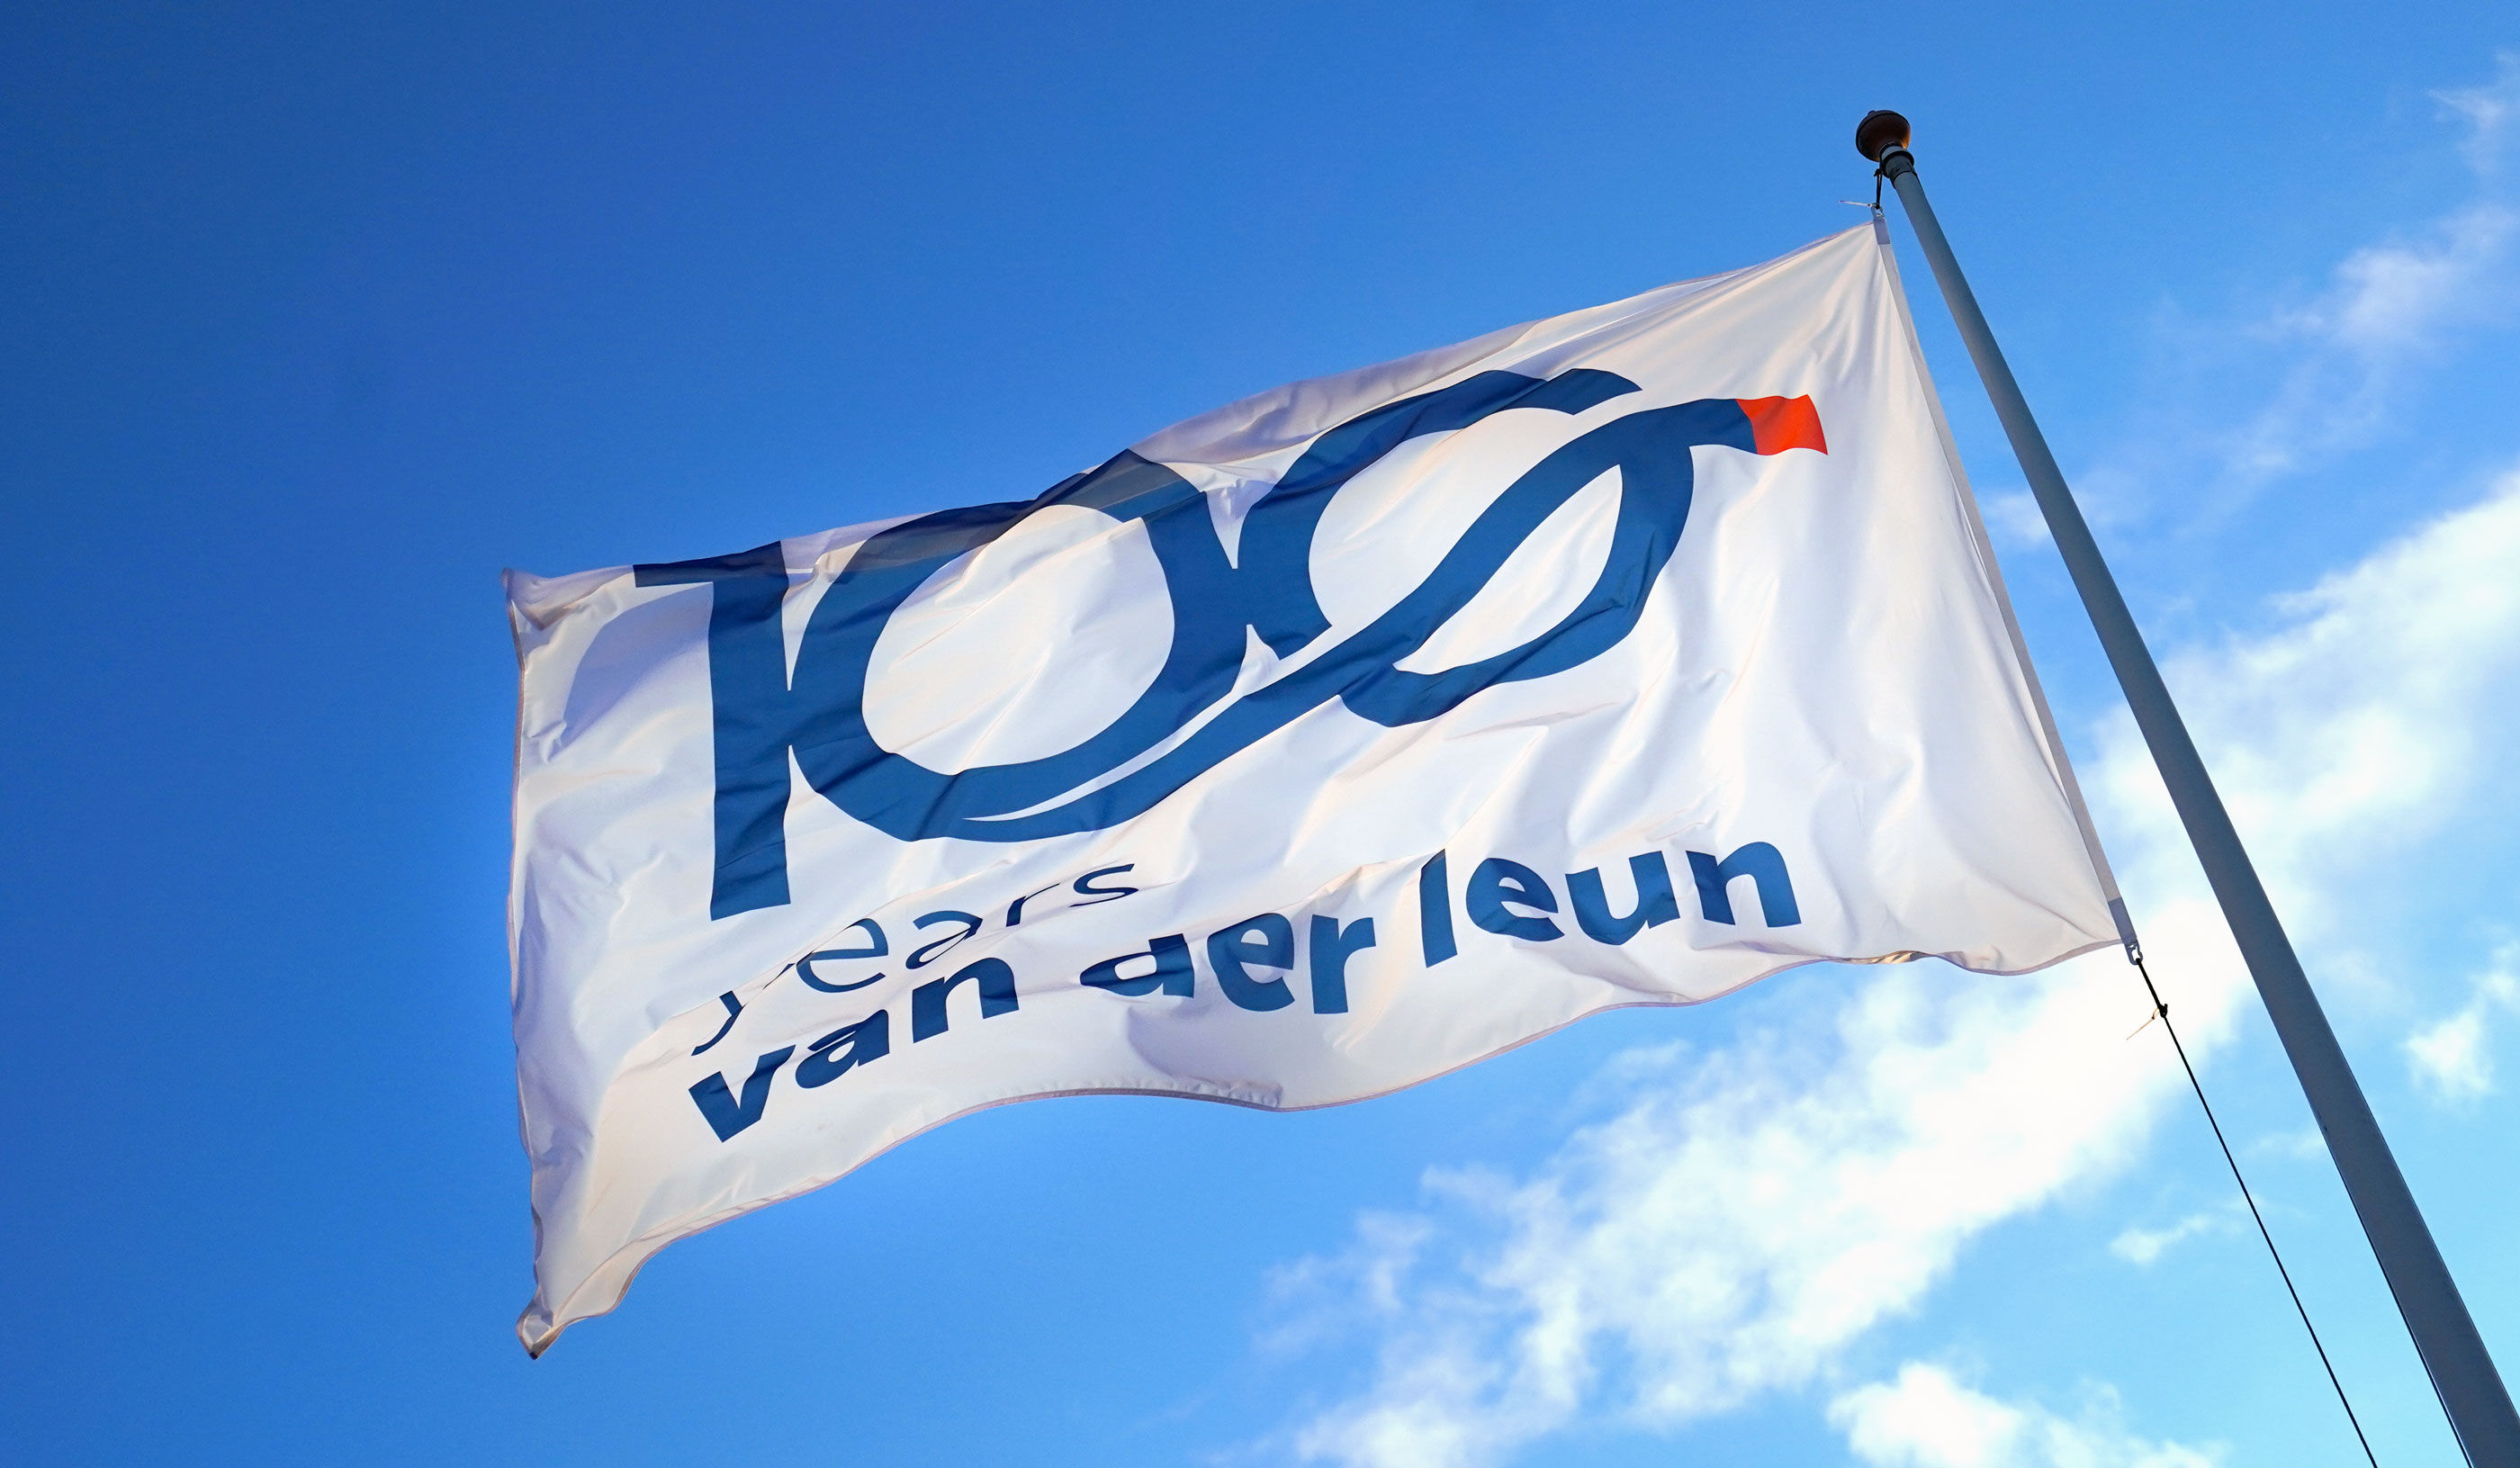 van-der-leun-100jaar-vlag-1